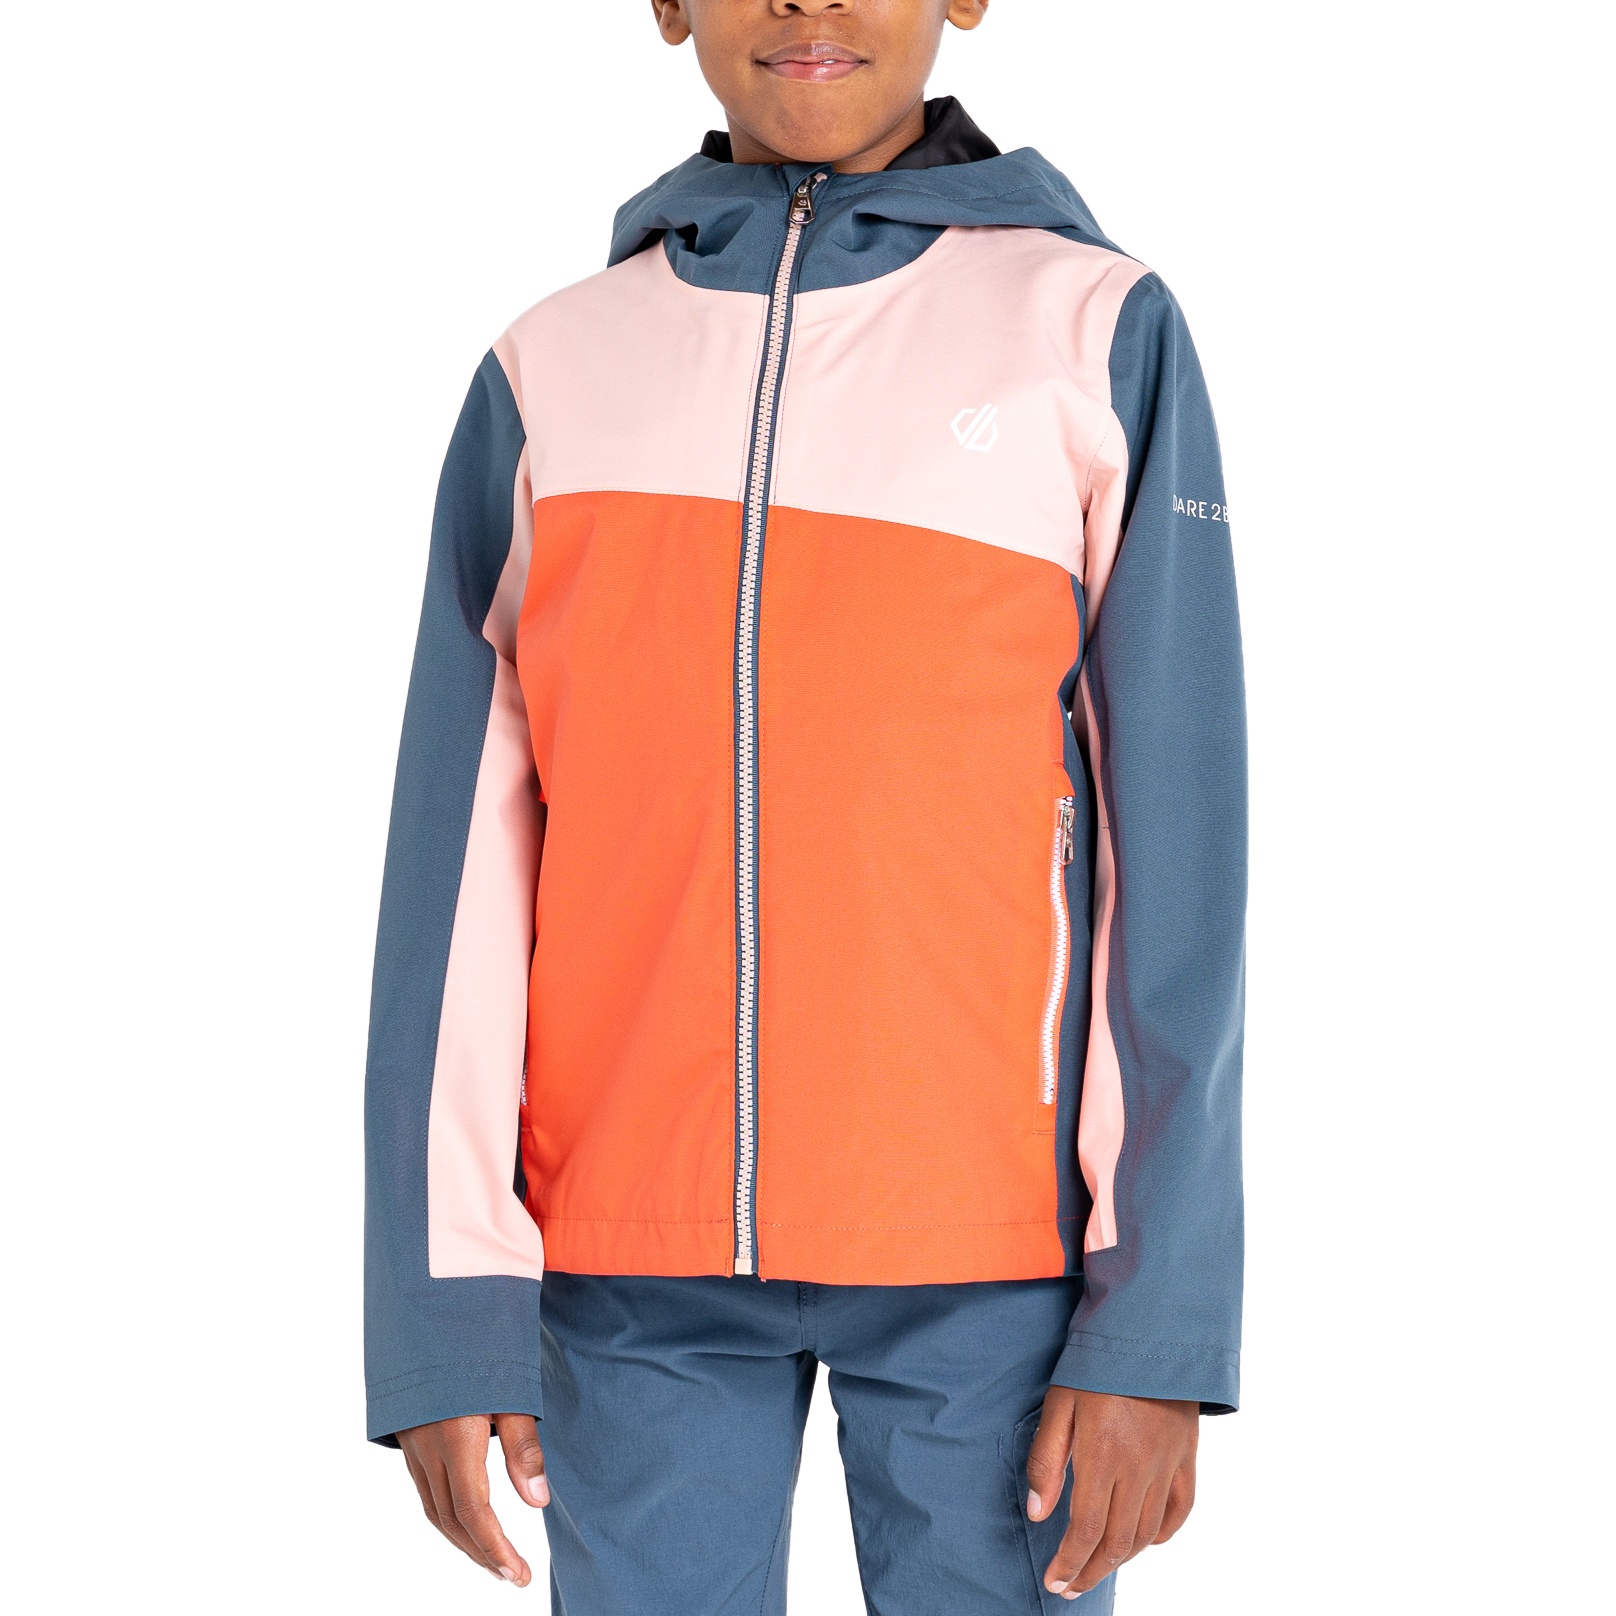 Productfoto van Dare 2b Explore Jacket Kids - DAD Apricot Blush/Neon Peach/Orion Grey